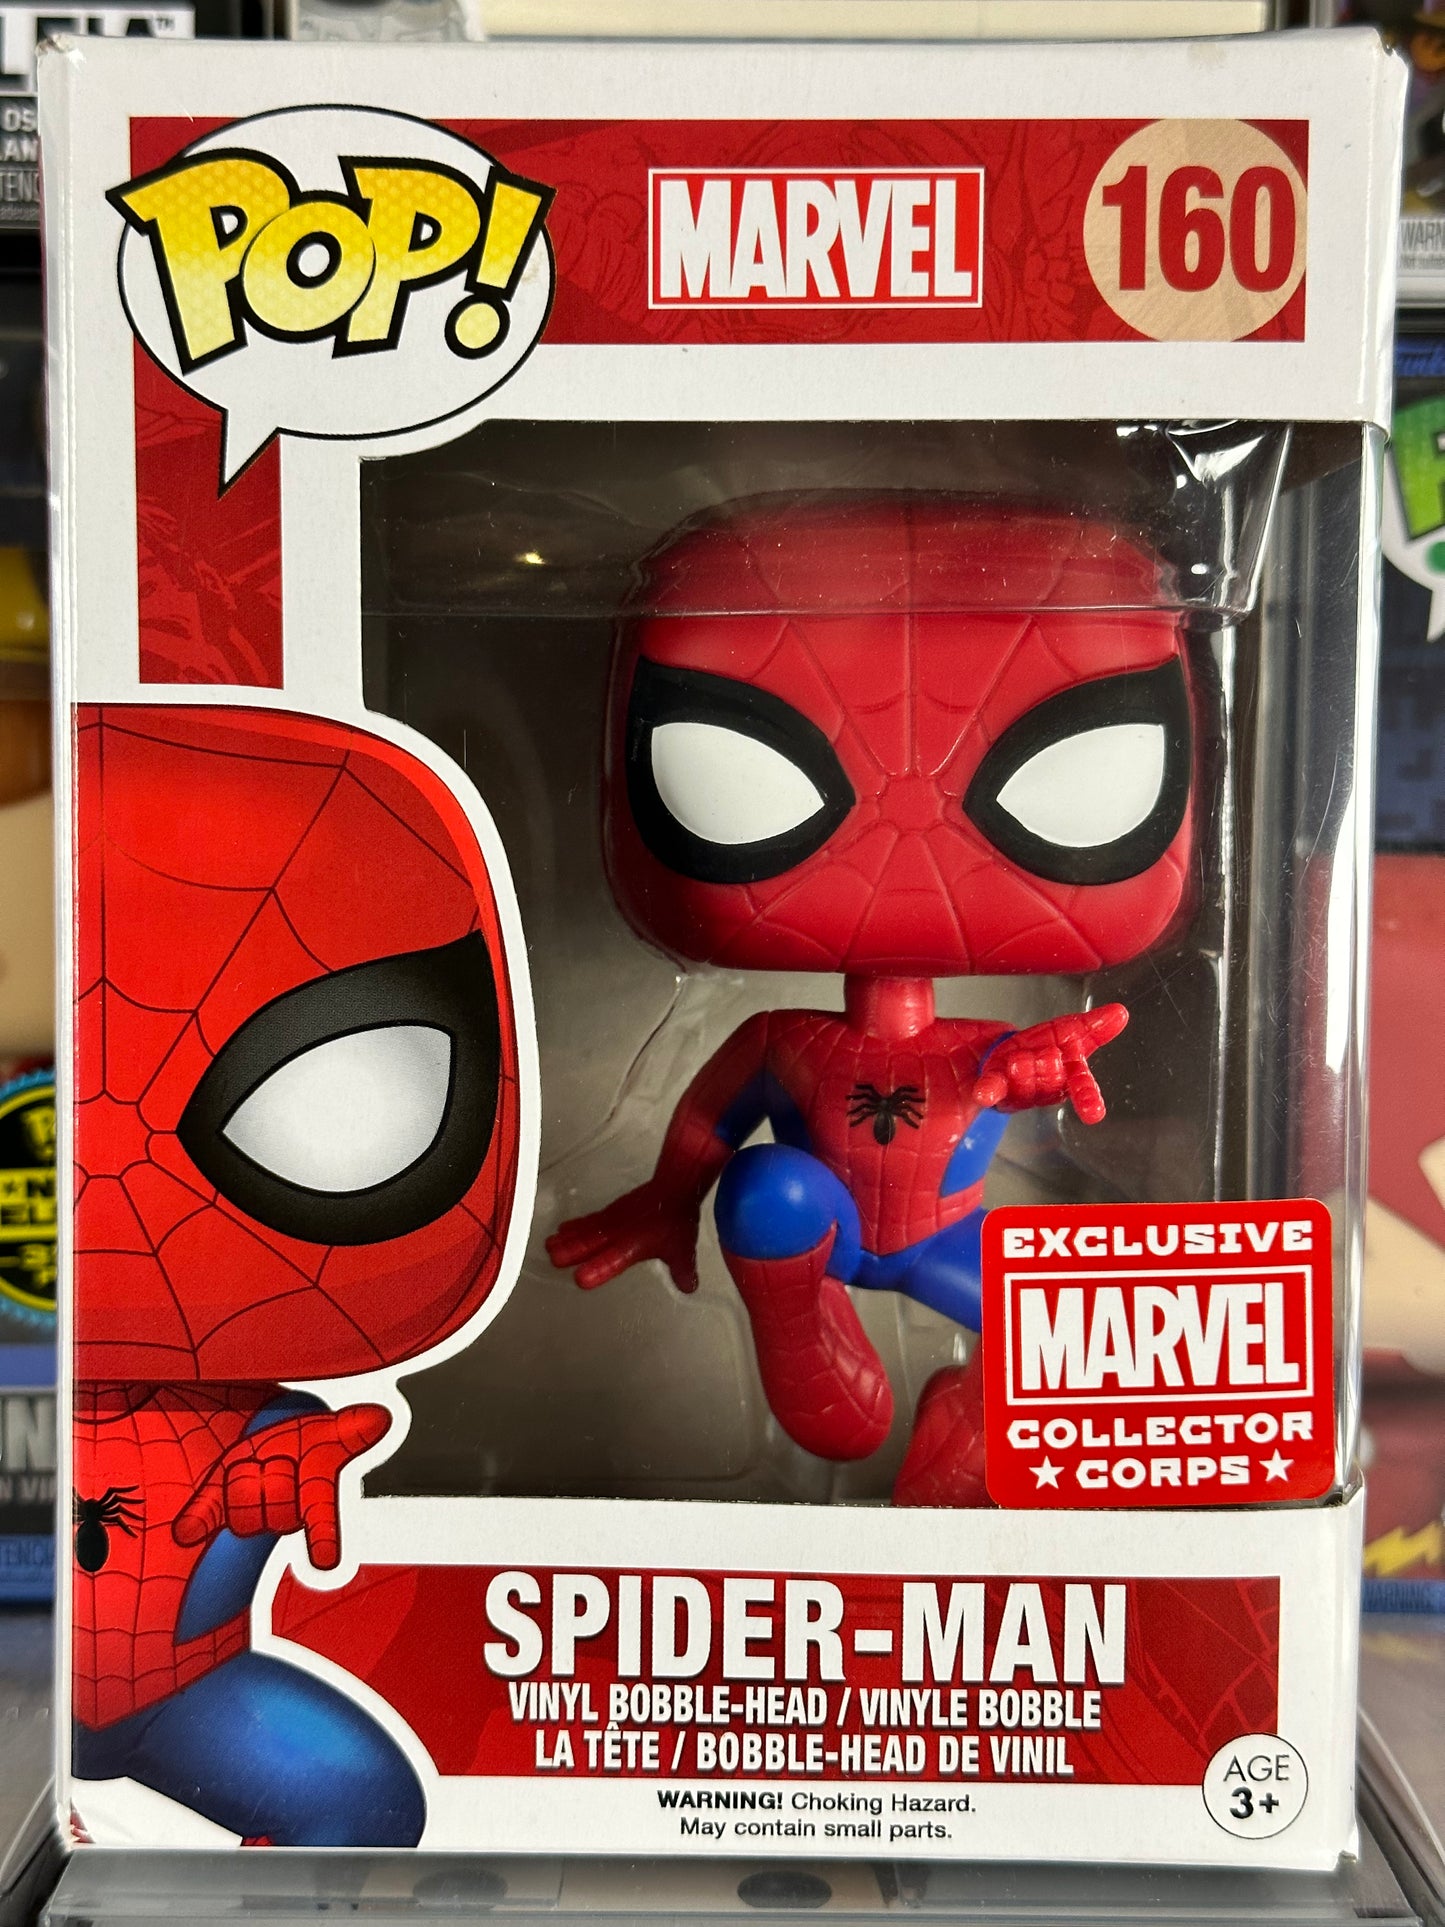 Marvel - Spider-Man (160)  Vaulted Marvel Collectors Corps Exclusive